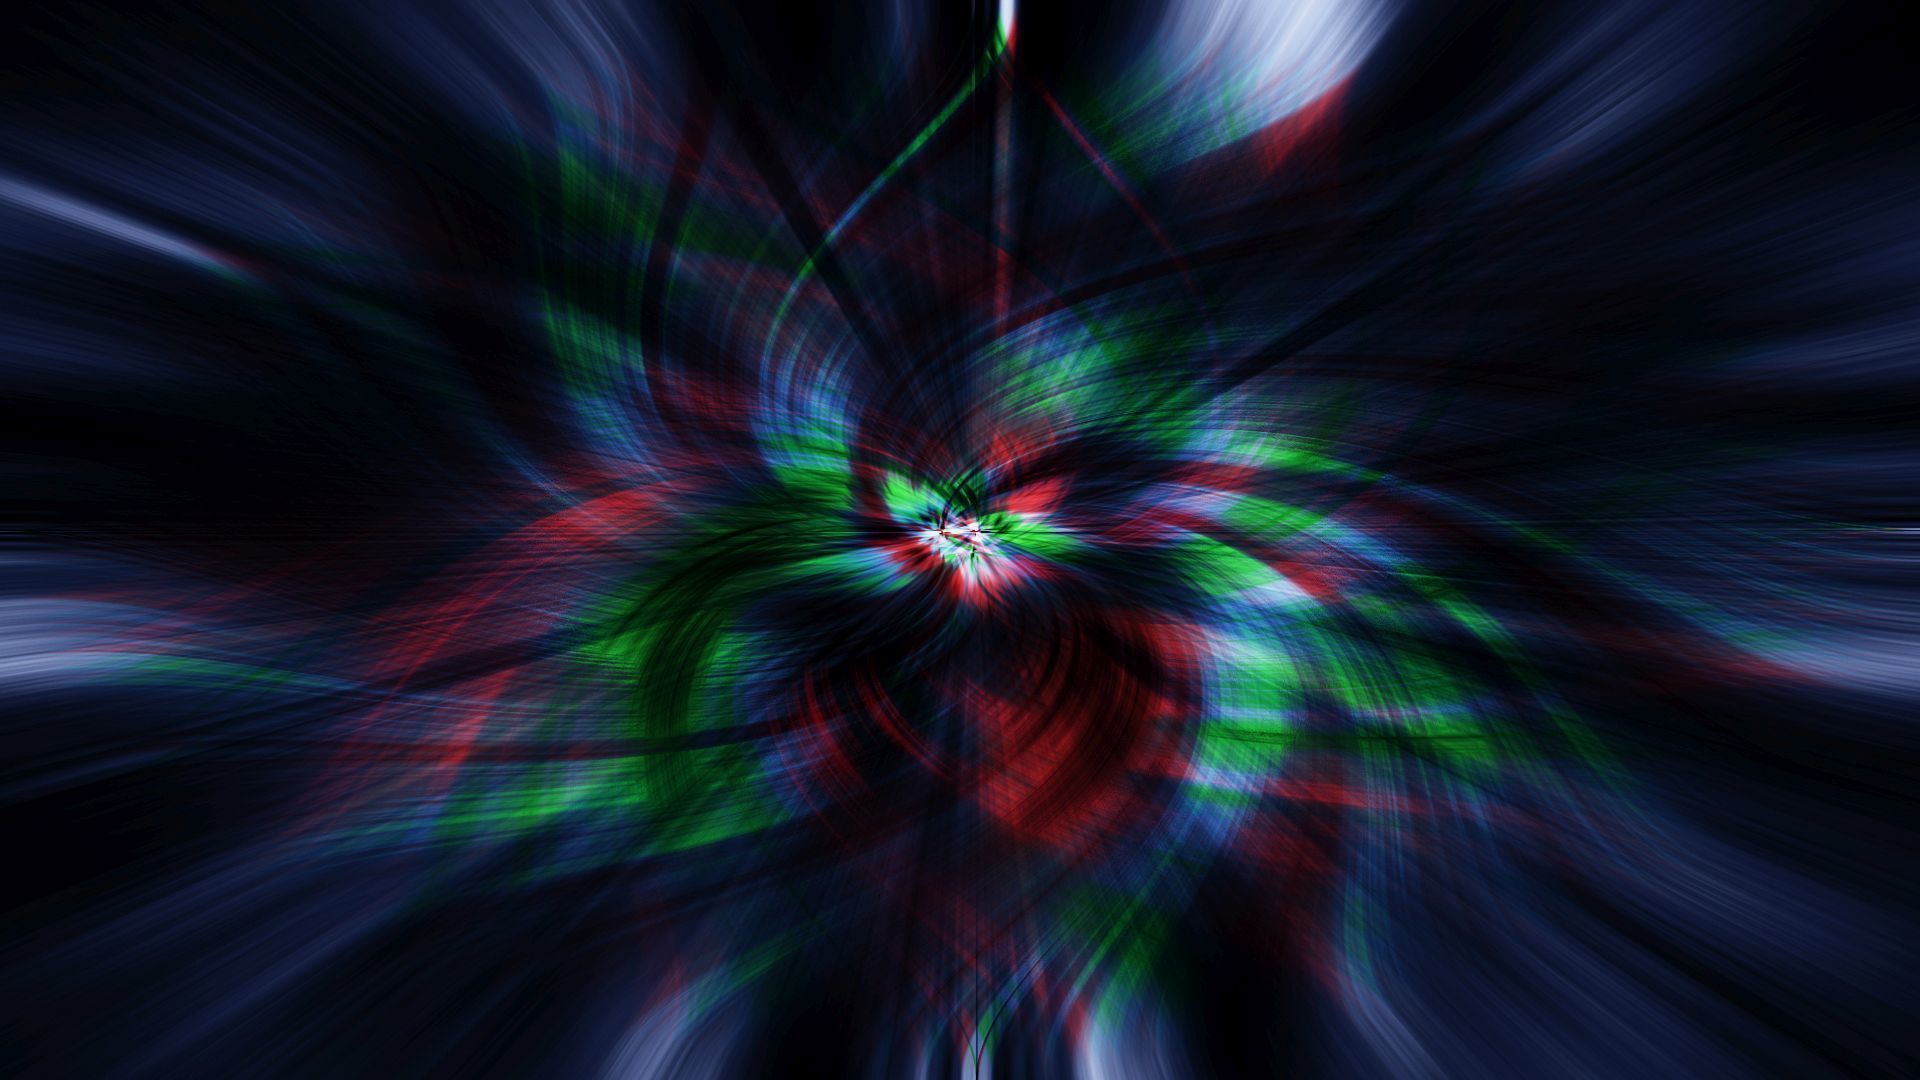 red-green-and-blue-swirl-1080p-abstract-desktop-wallpaper-24999.jpg